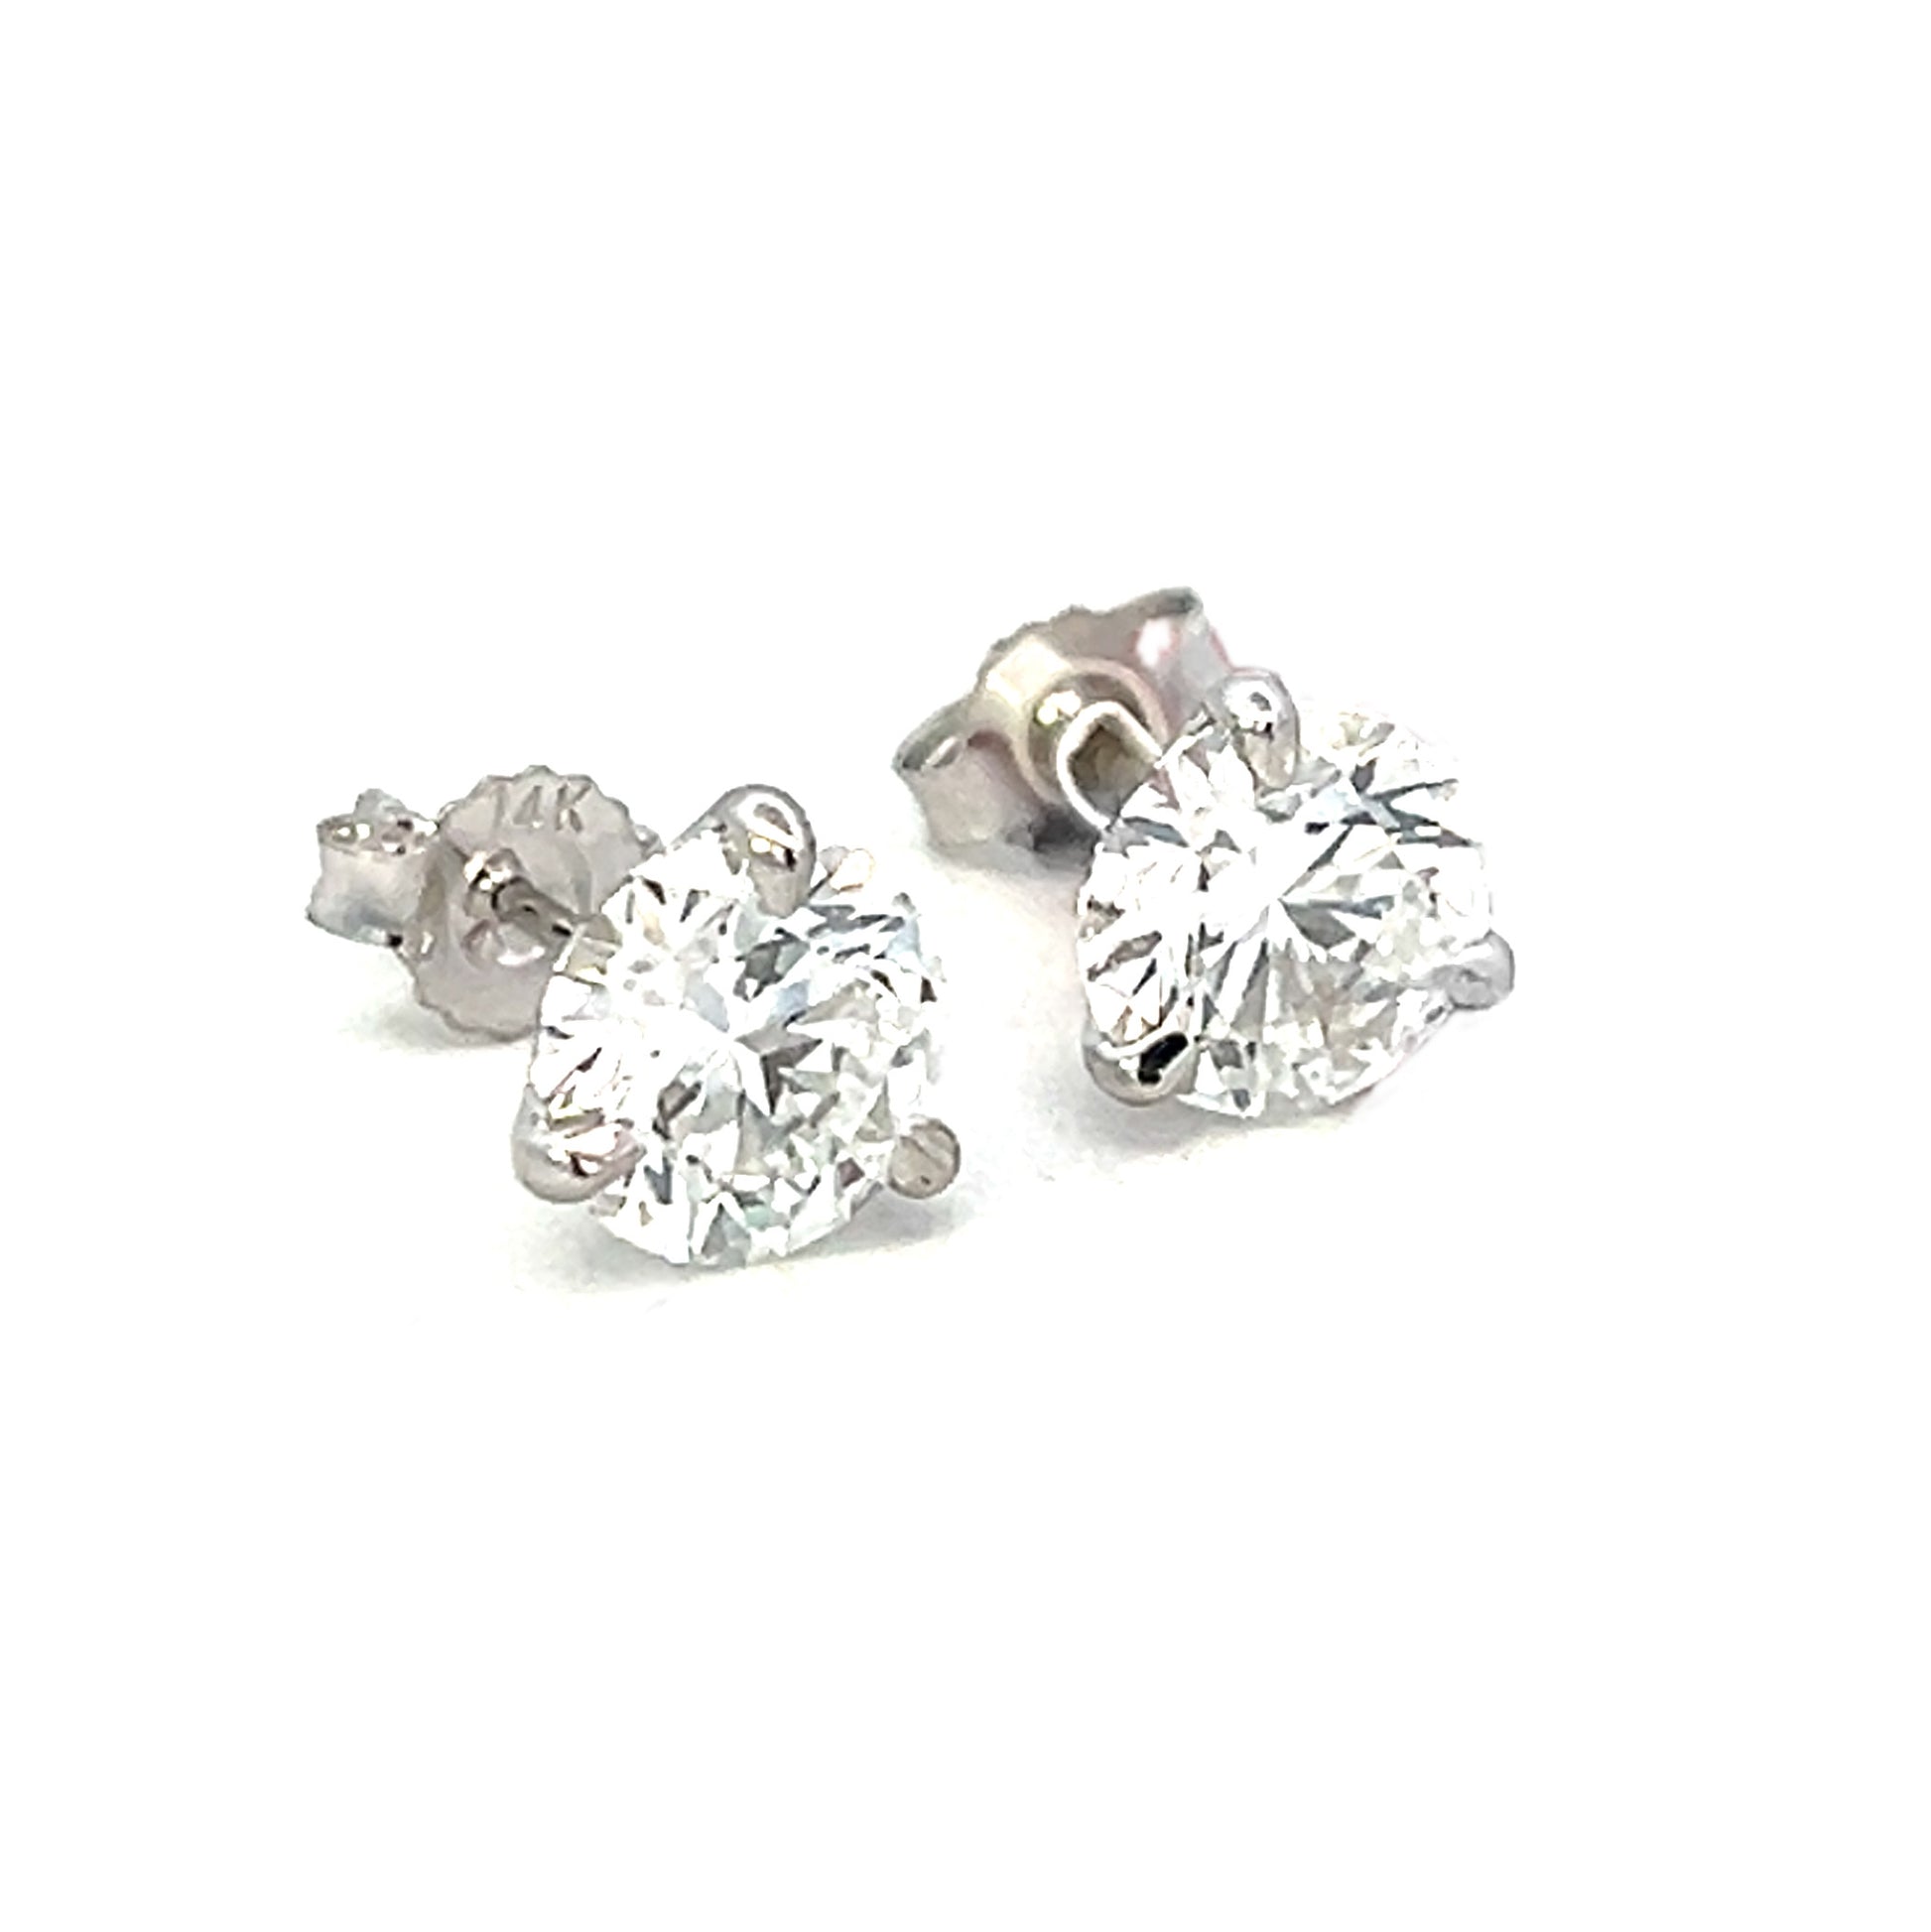 3.16cttw Diamond Stud Earrings | White Gold Diamond Earrings | Dia Studs